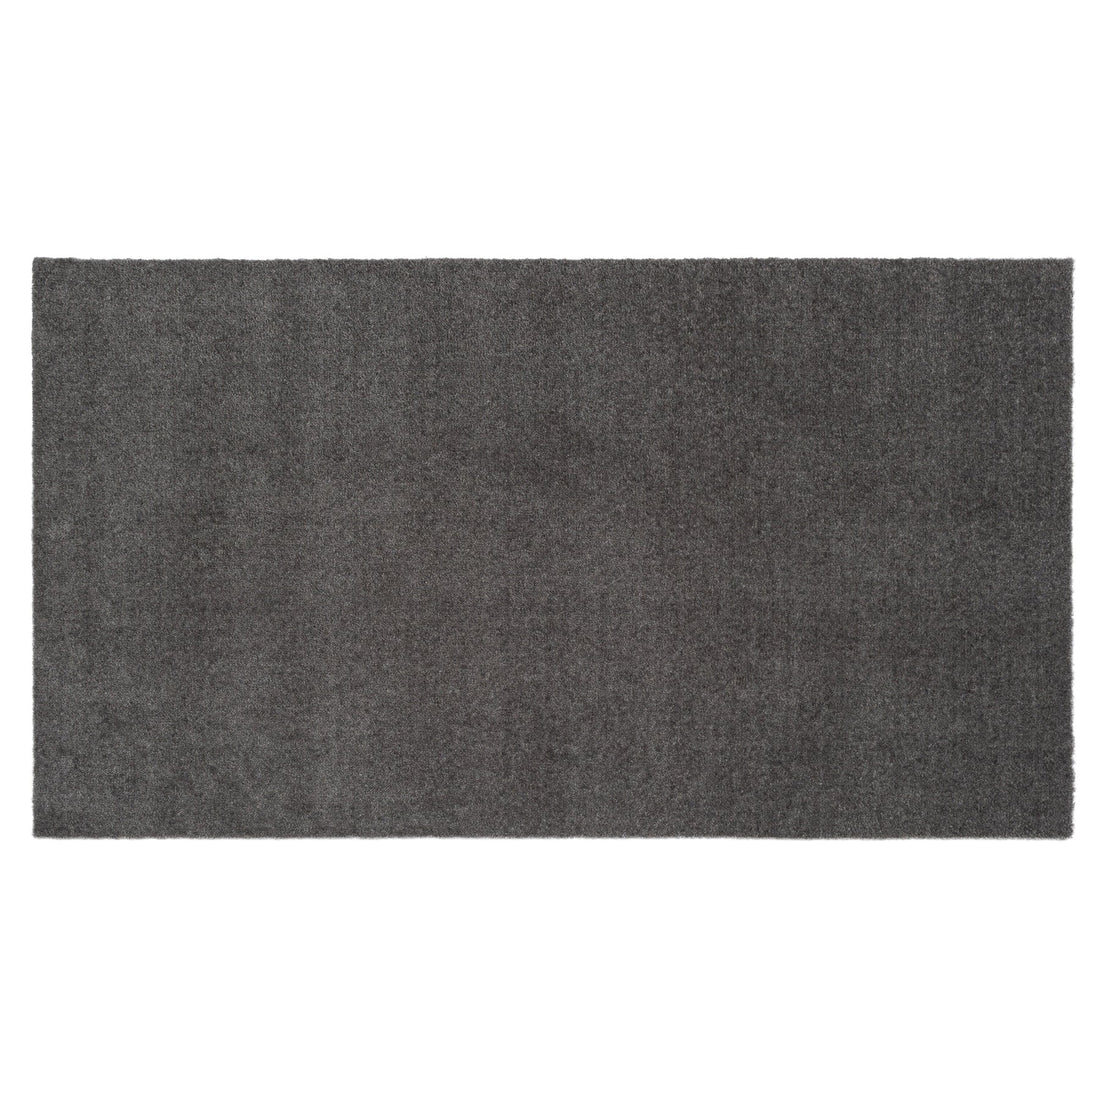 Blanket/had 67 x 120 cm - uni color/steelgrey